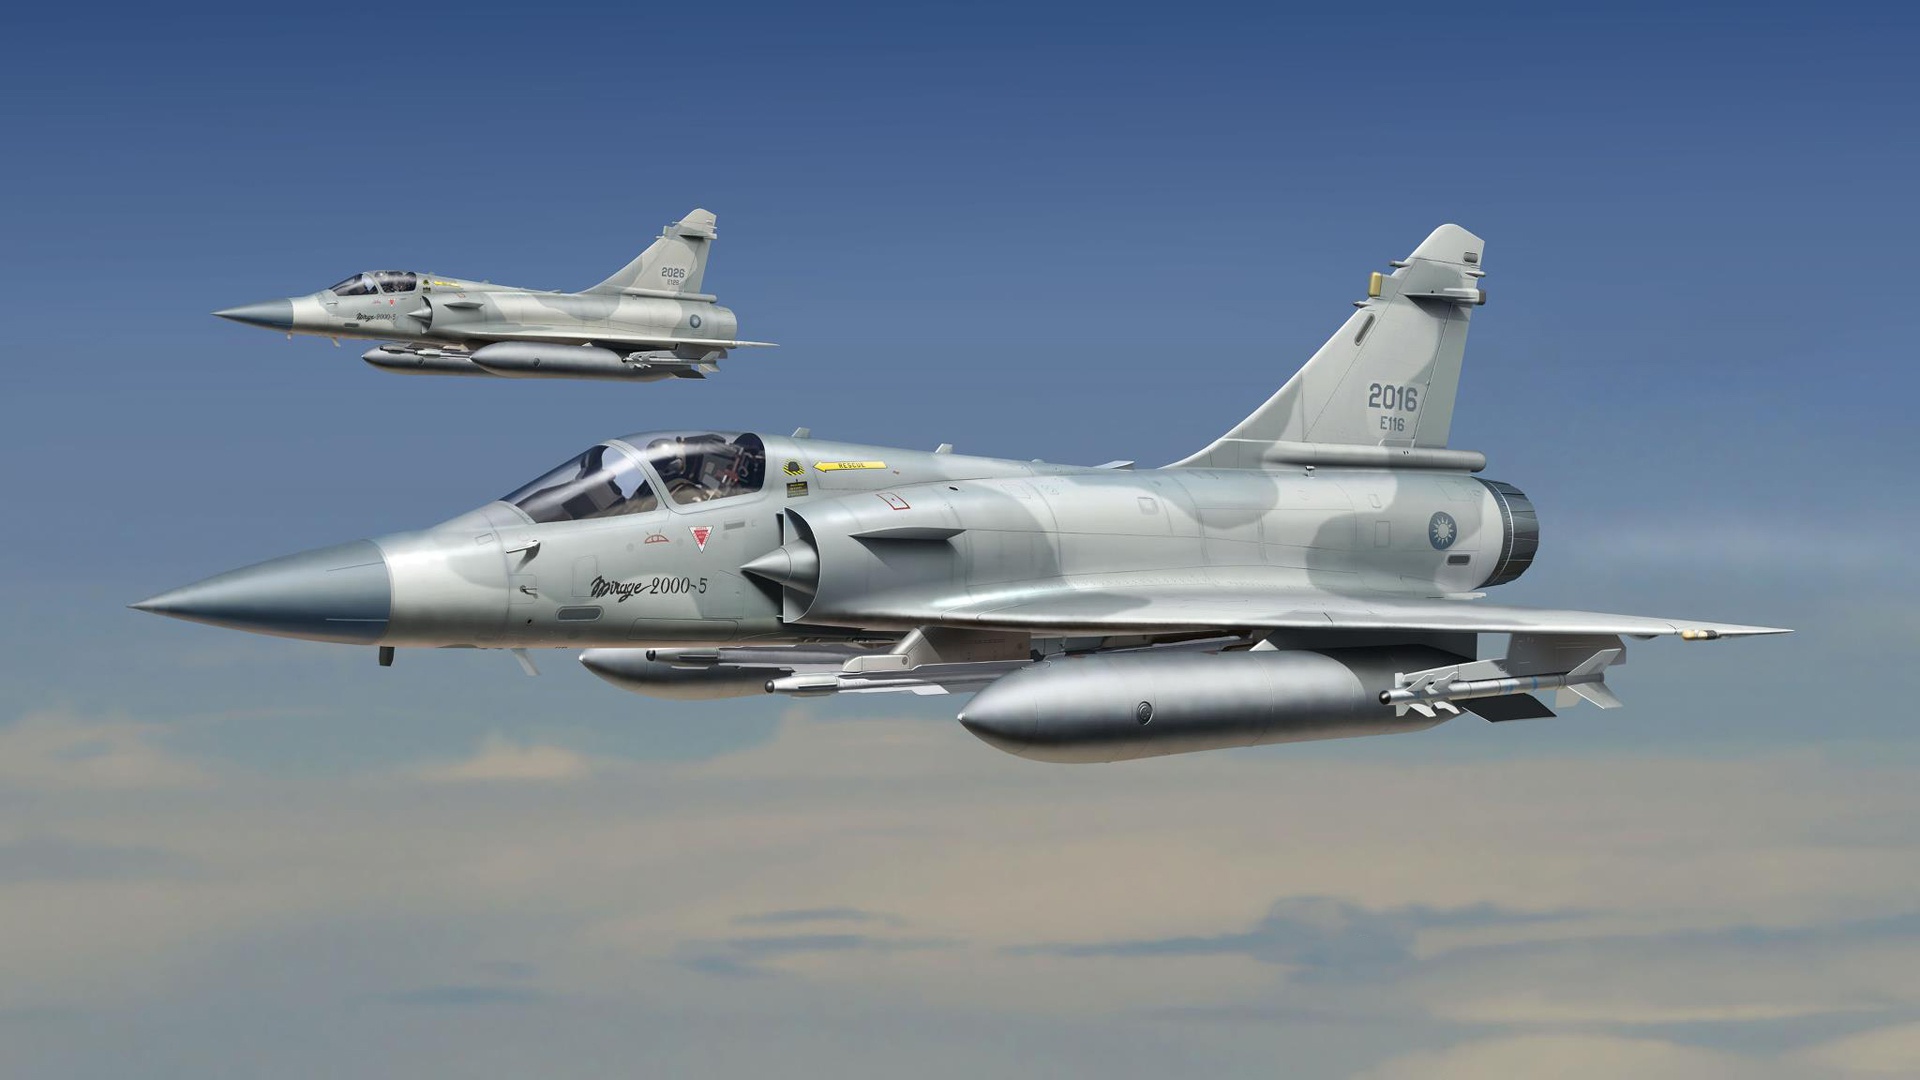 General 1920x1080 artwork Mirage 2000 military vehicle military aircraft aircraft Dassault Mirage 2000 french aircraft Dassault Aviation